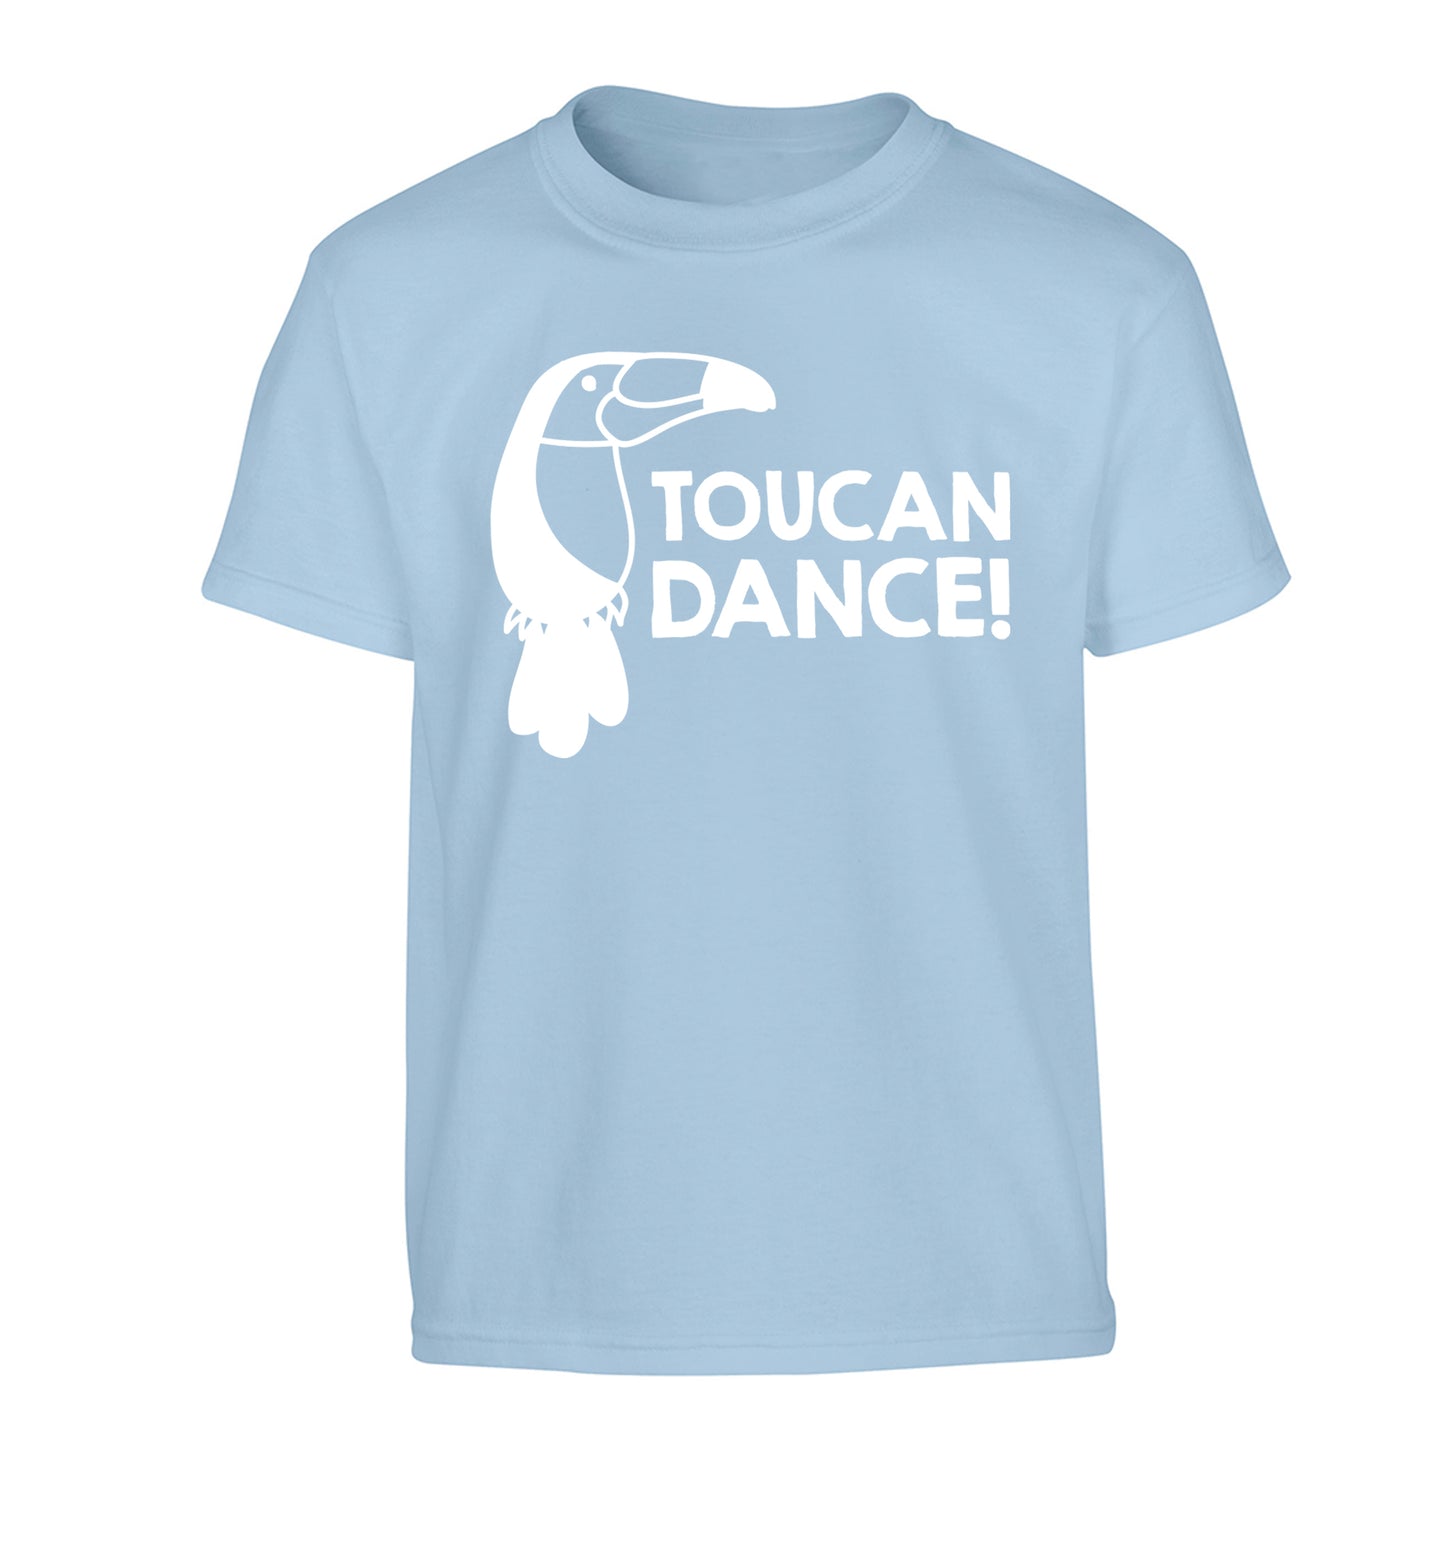 Toucan dance Children's light blue Tshirt 12-13 Years